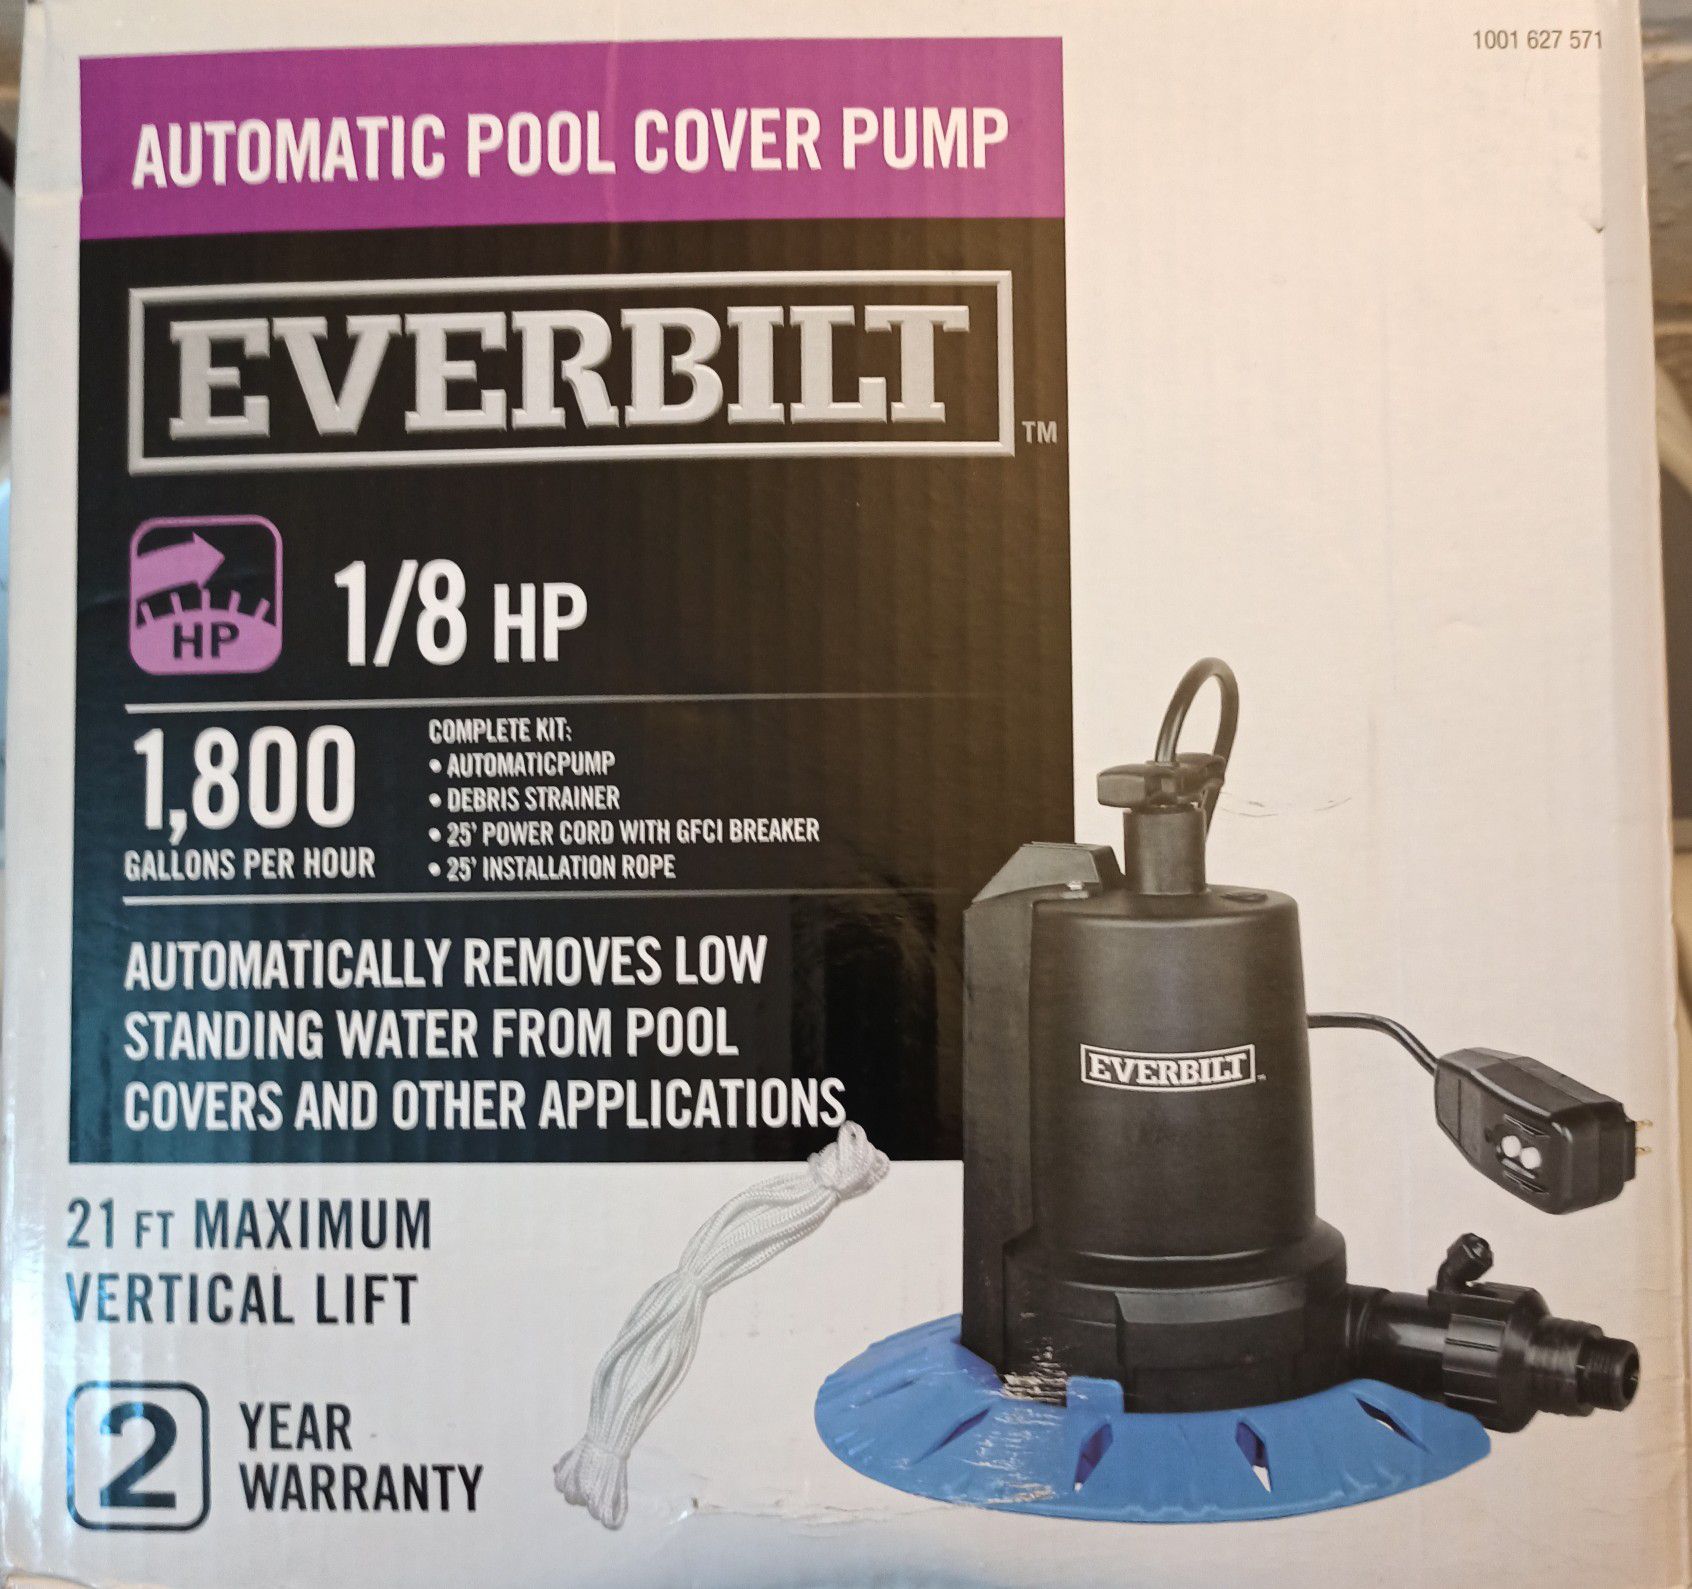 Automatic Pool Cover Pump 1/8 HP Everbilt